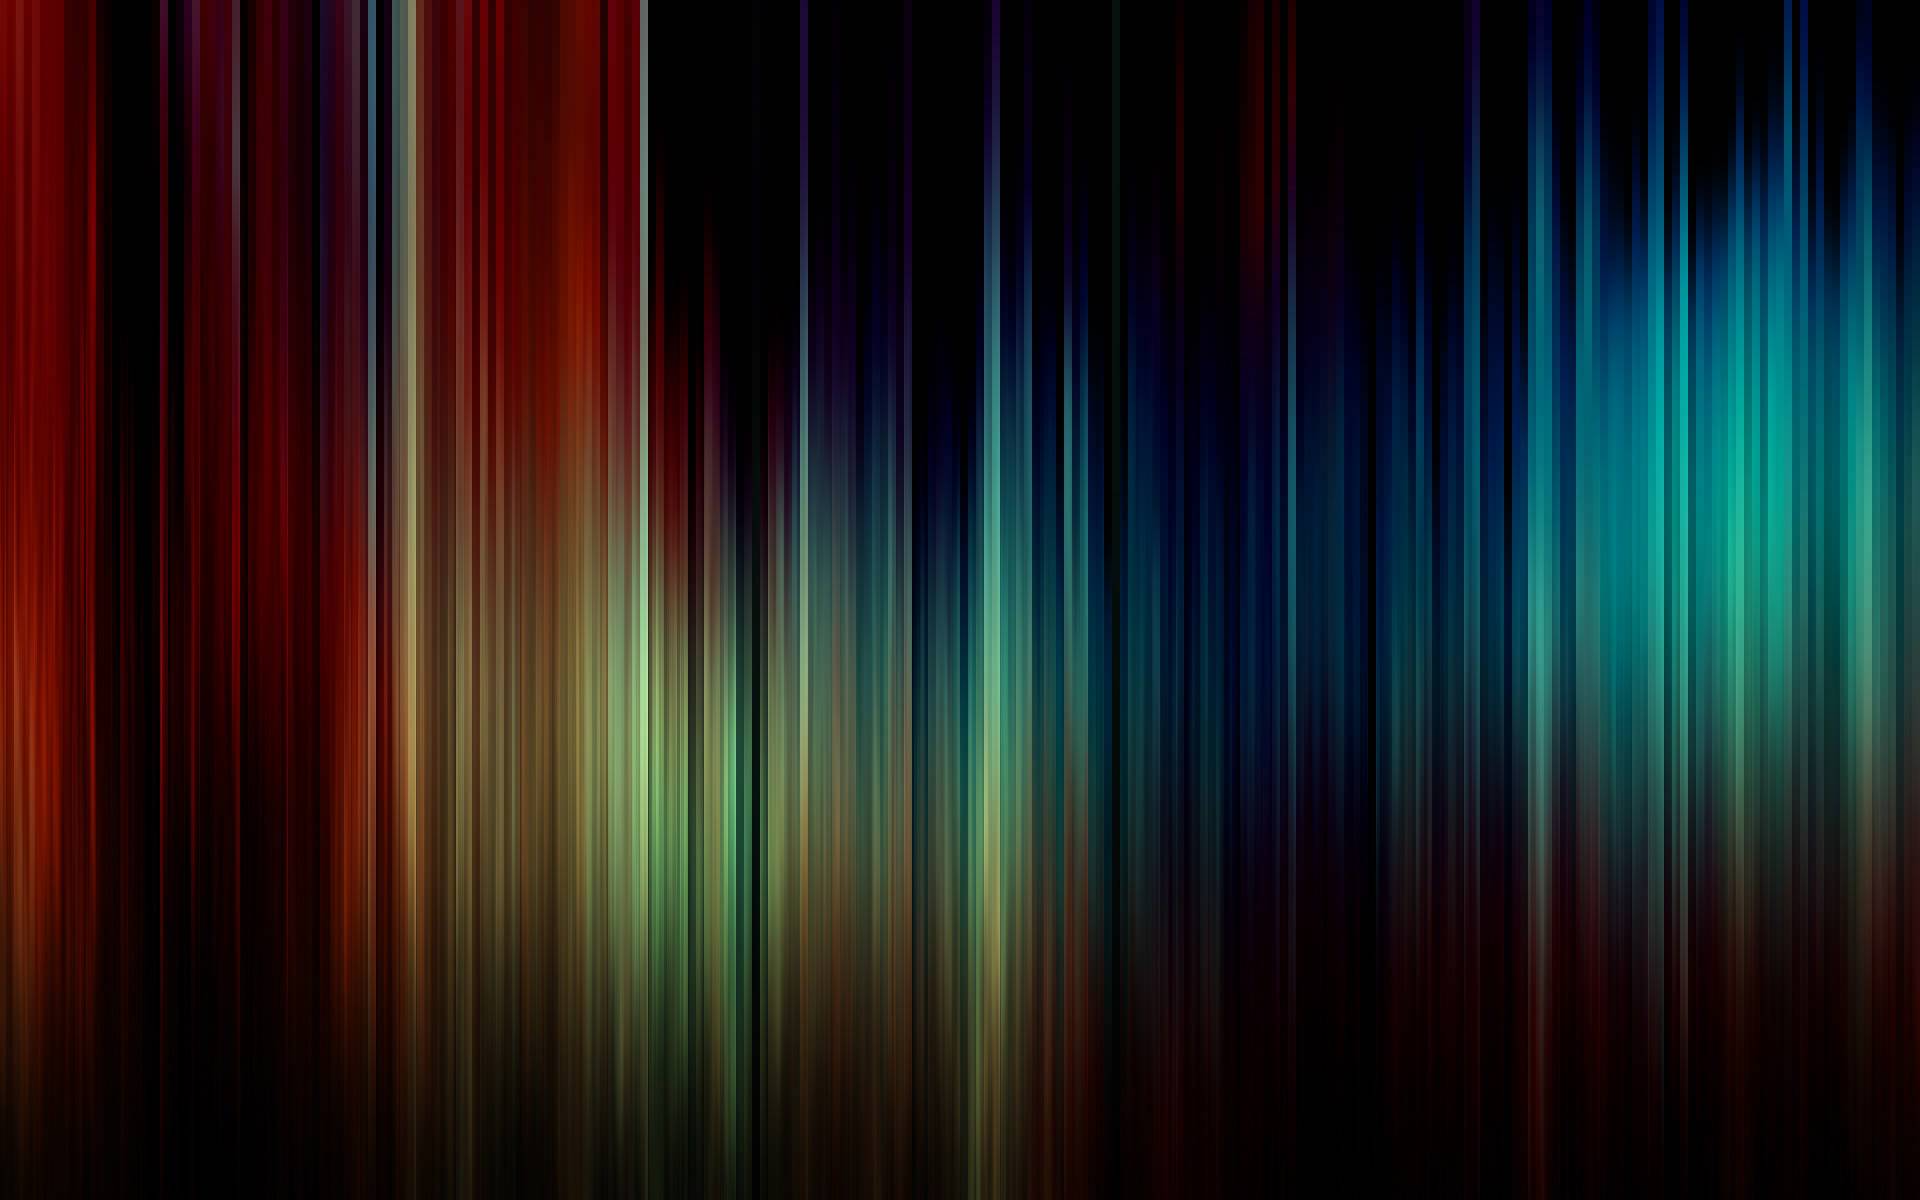 wallpaper de colores,blue,black,red,light,green